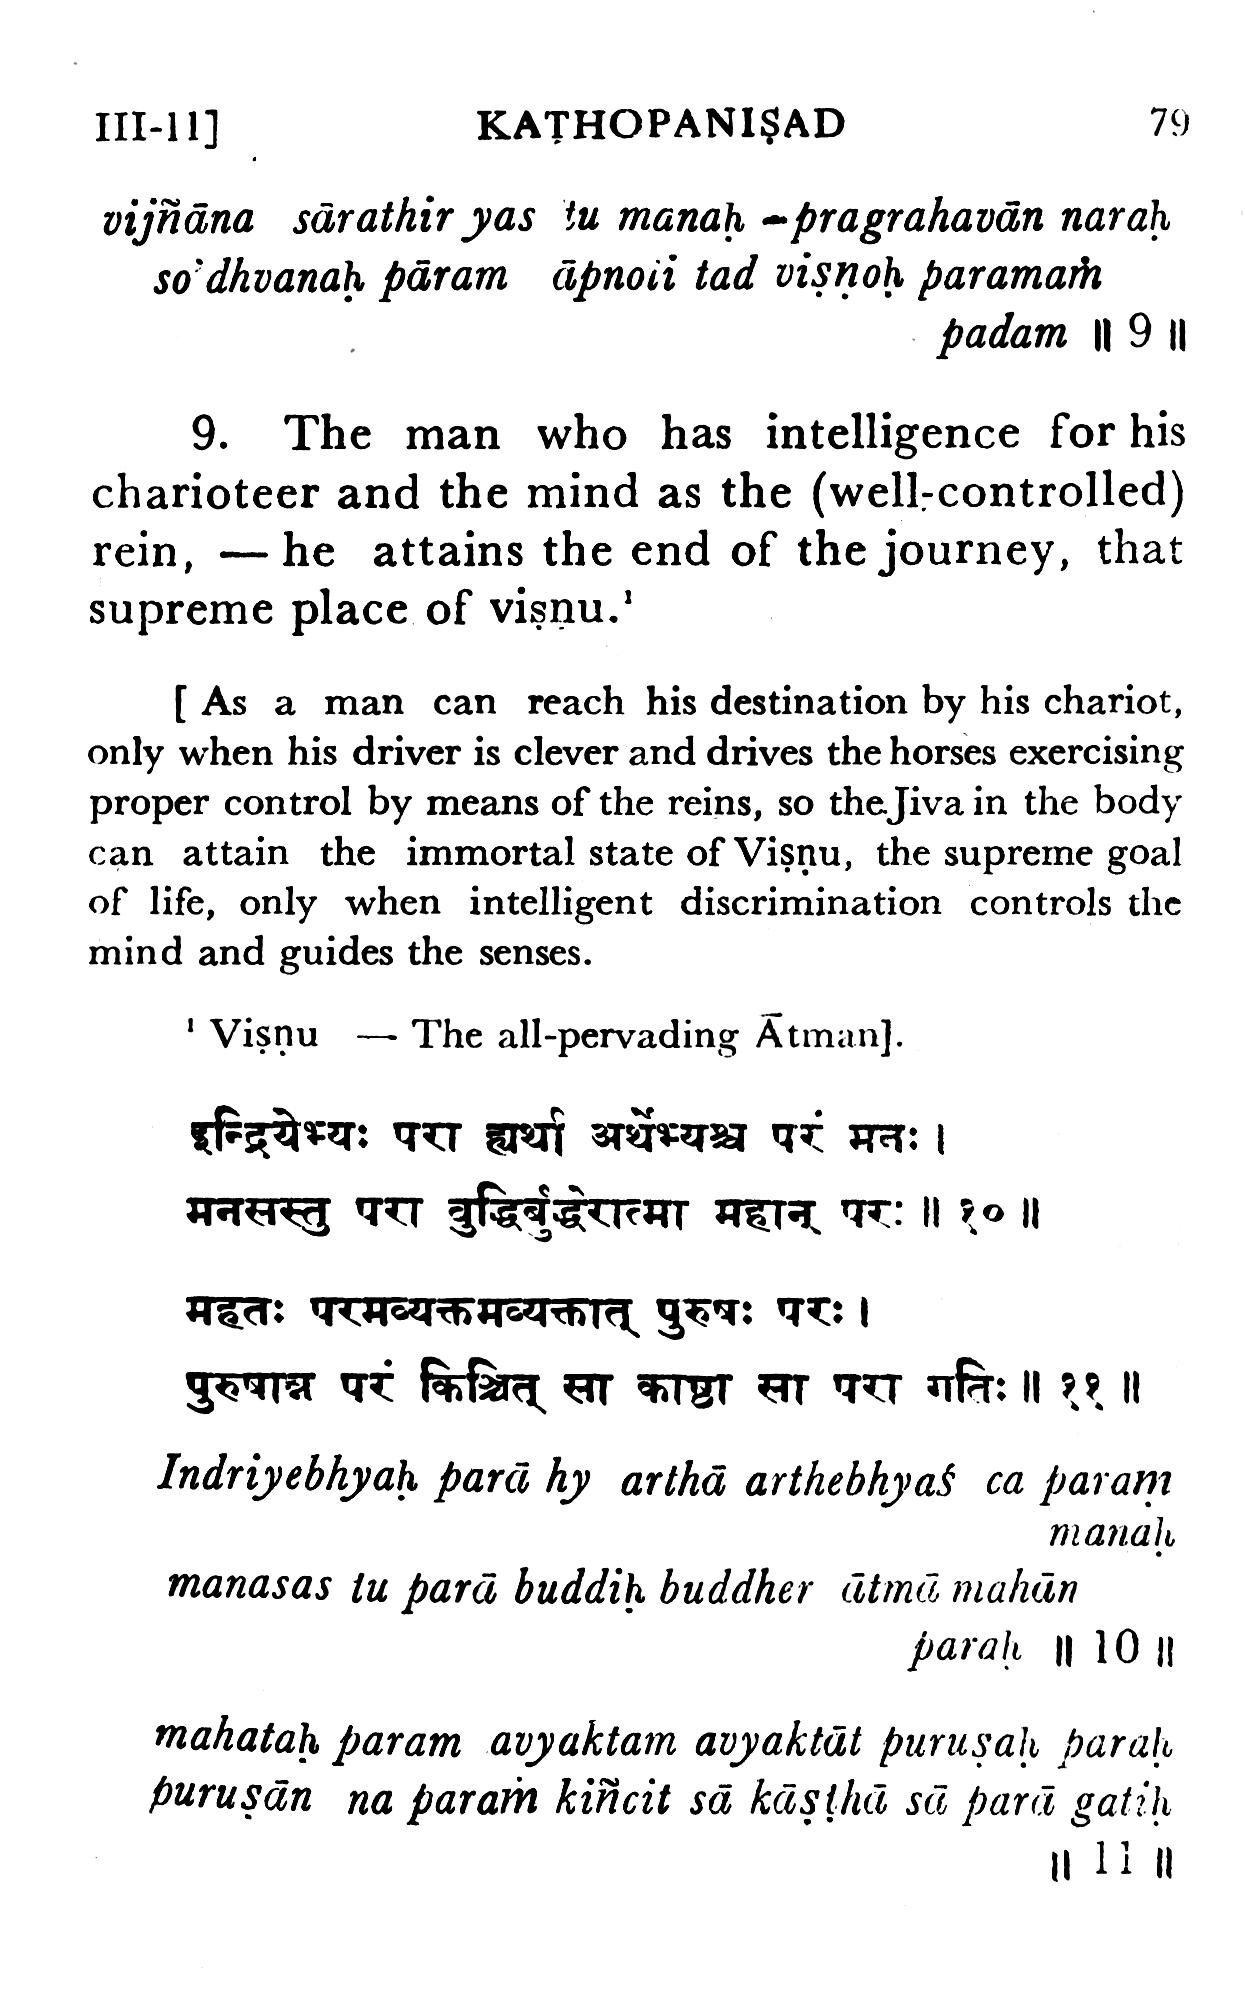 Katha Upanishad - Translated By Swami Sarvananda